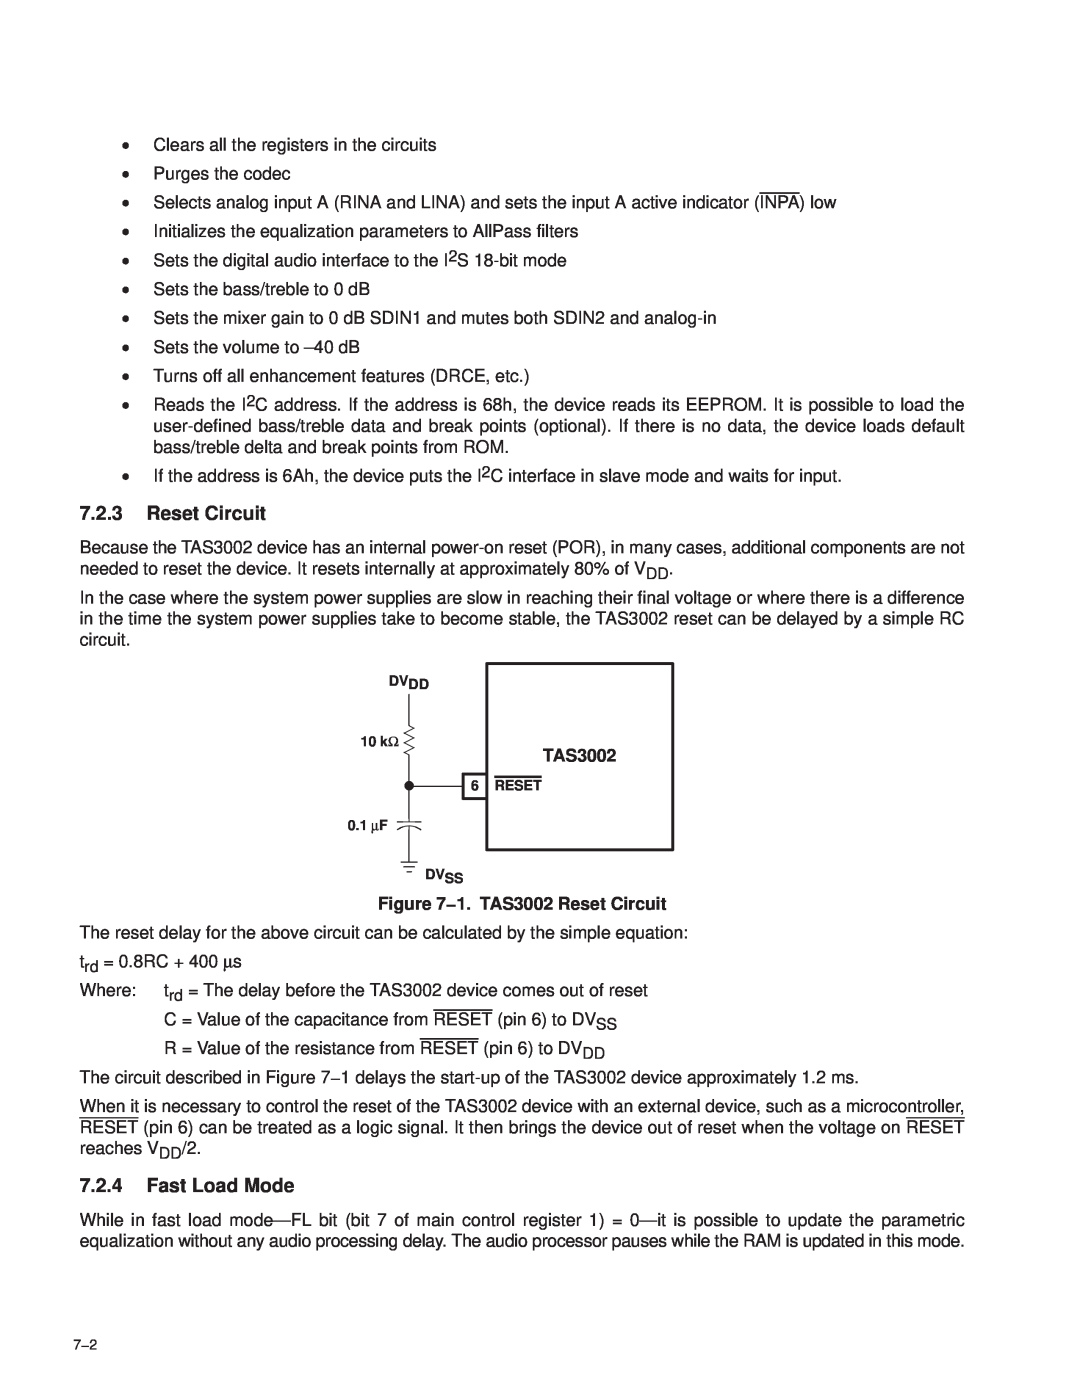 Texas Instruments manual 7.2.3Reset Circuit, 7.2.4Fast Load Mode, 1. TAS3002 Reset Circuit 